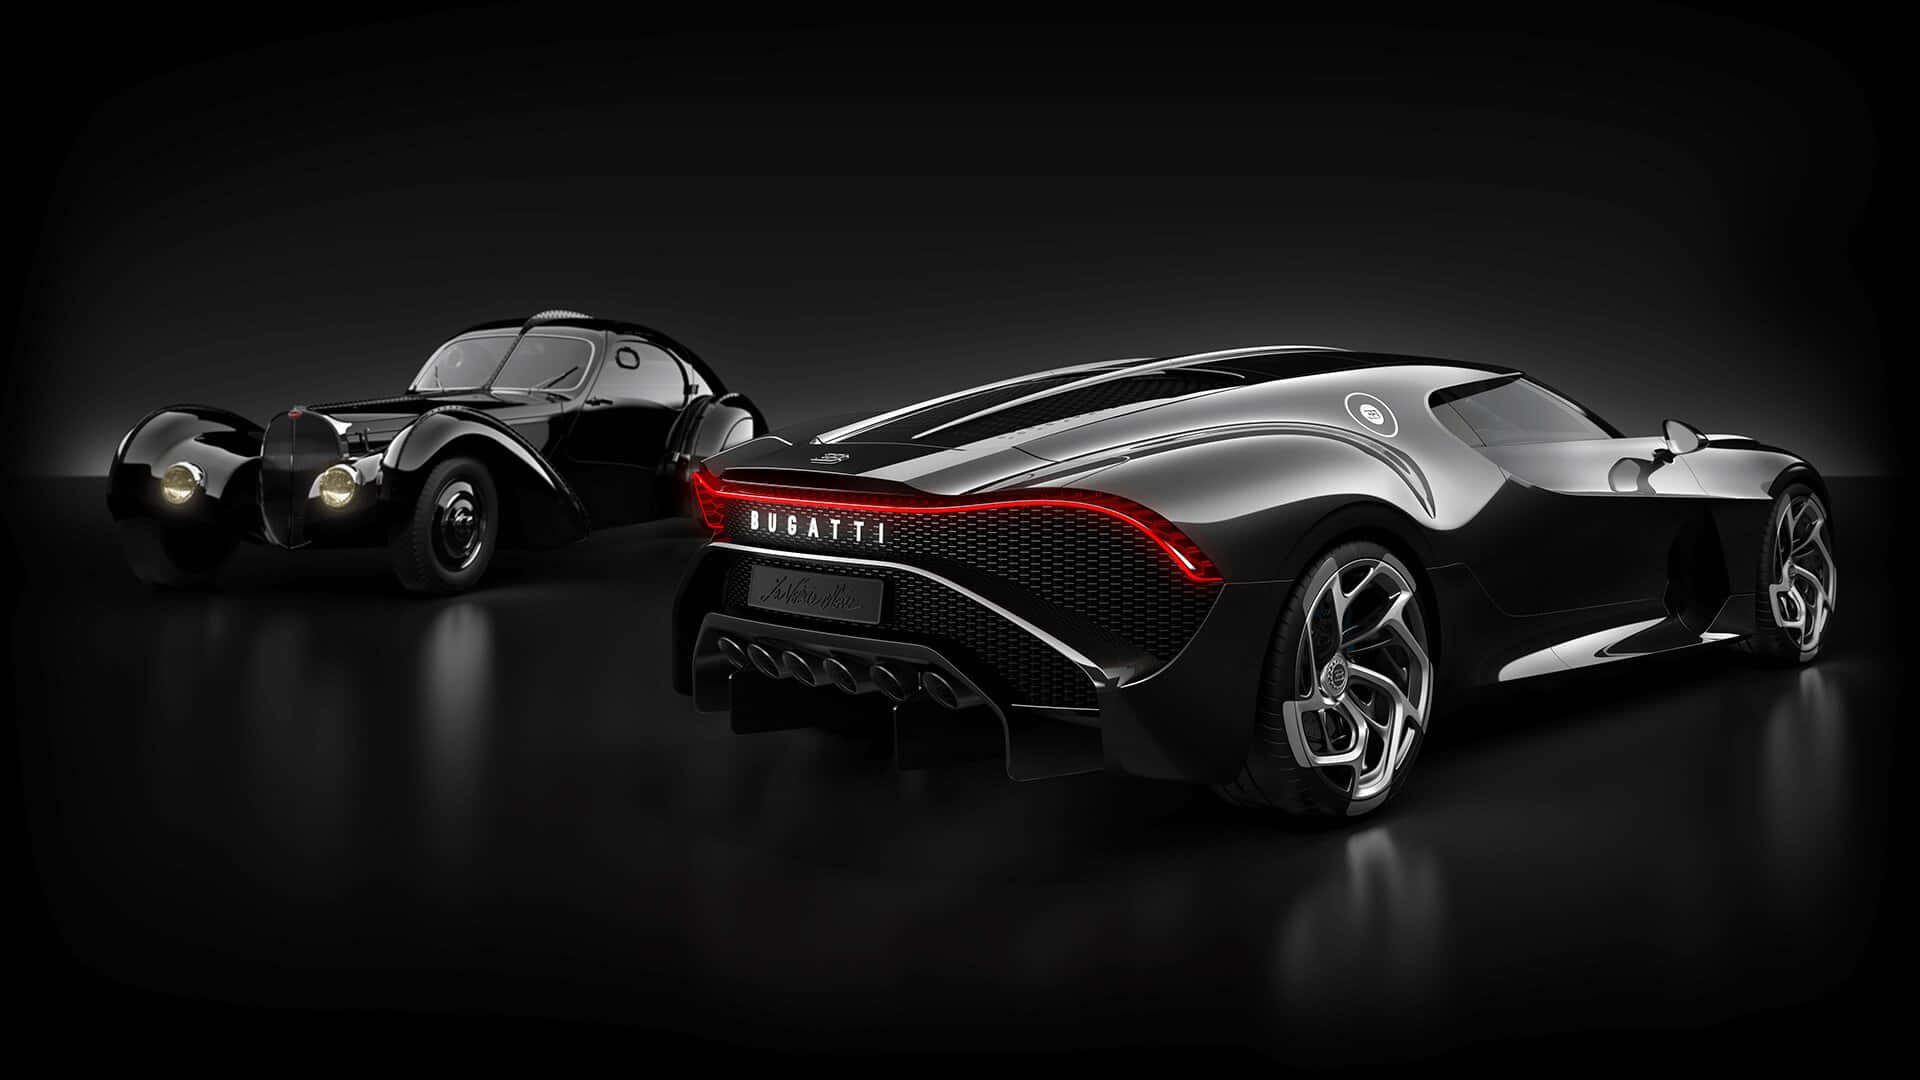 "The Neon Bugatti: An Illuminating Automotive Experience". Wallpaper